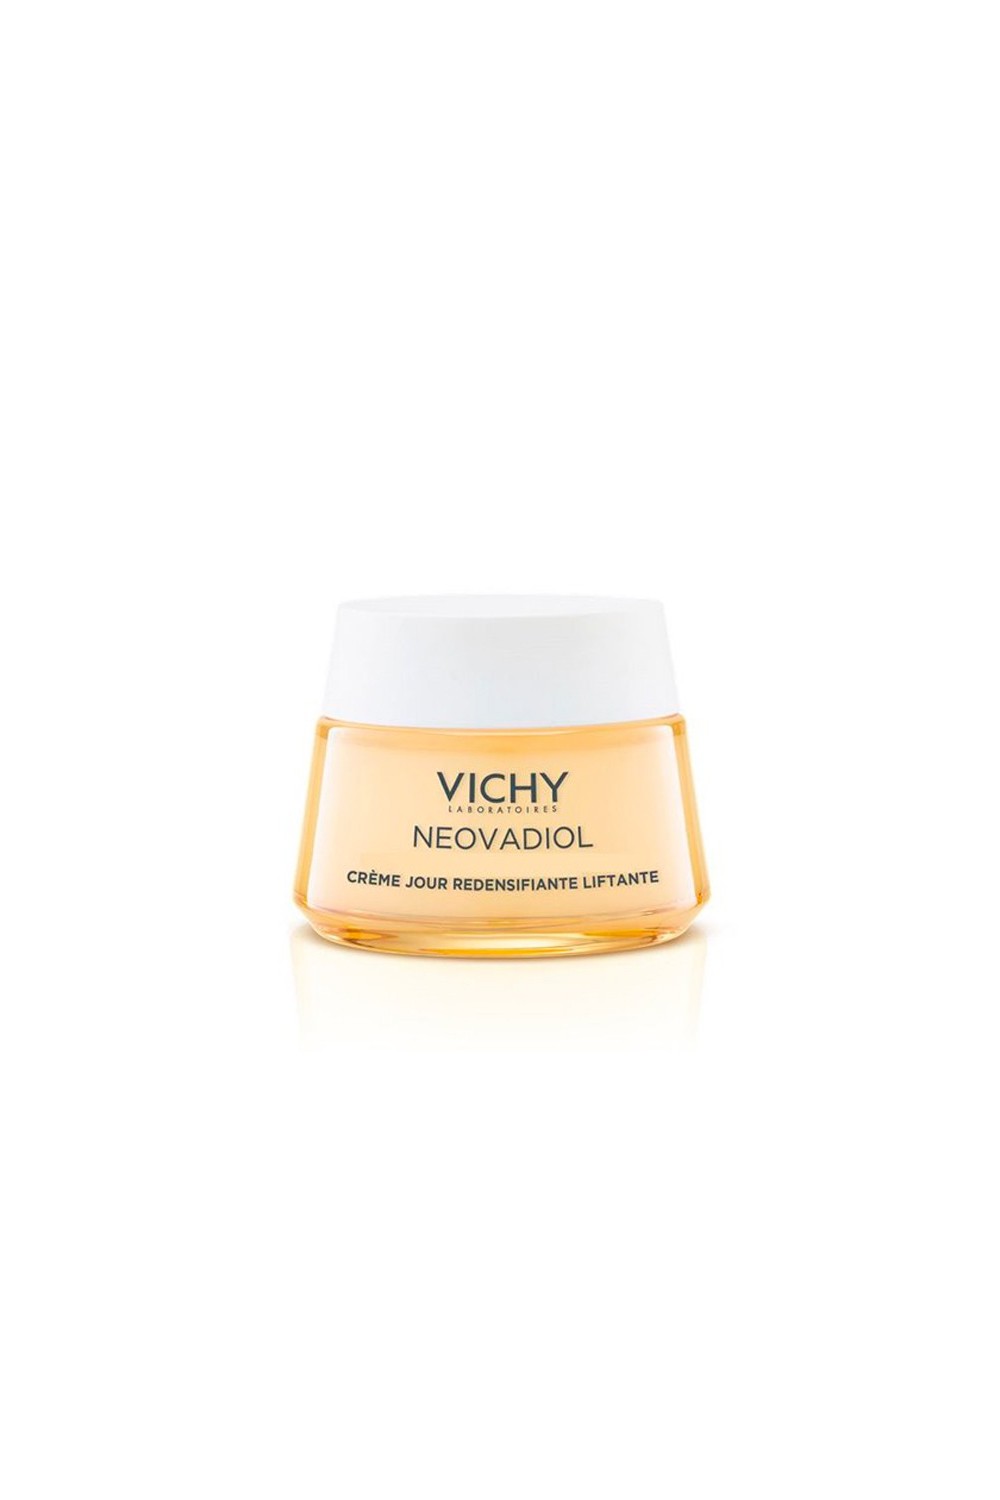 Vichy Neovadiol Peri Menopause Redensifying Day Cream Dry Skin 50ml